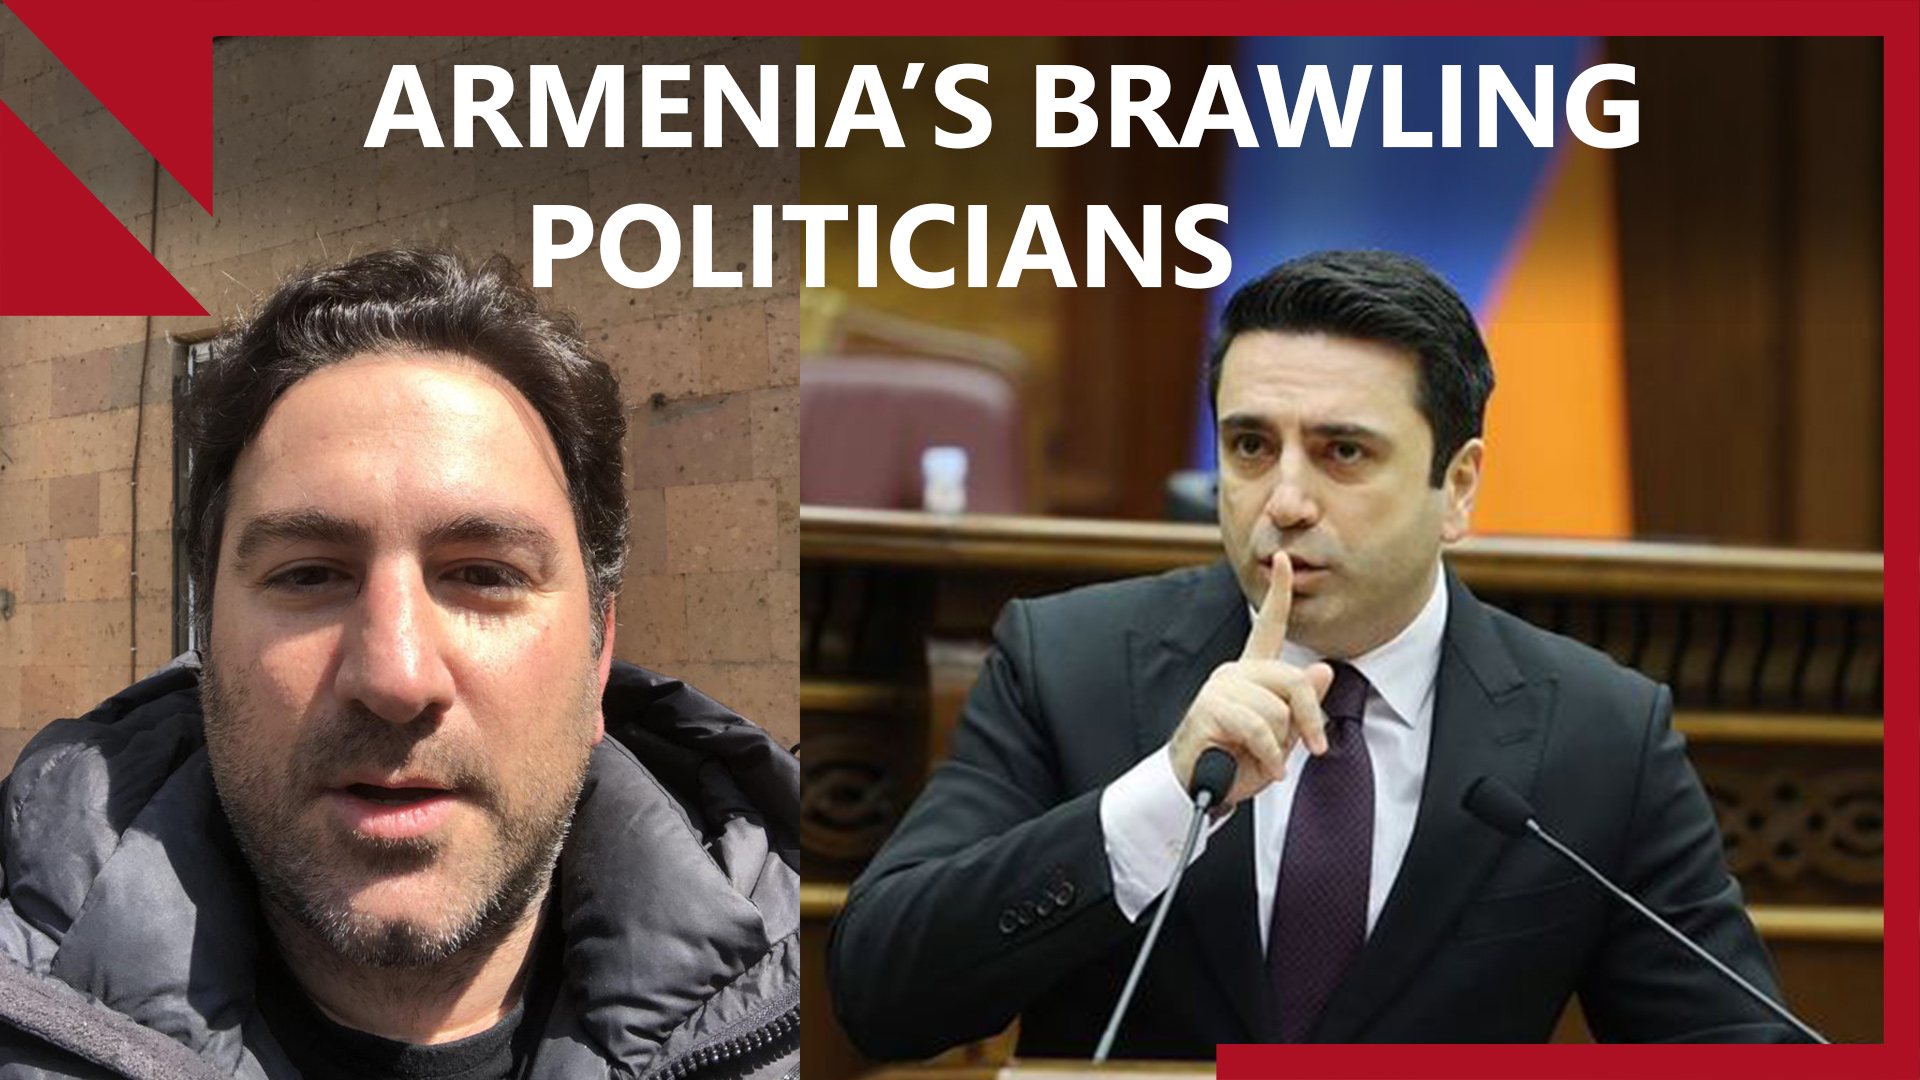 Spitting, Brawling and Armenian Politics